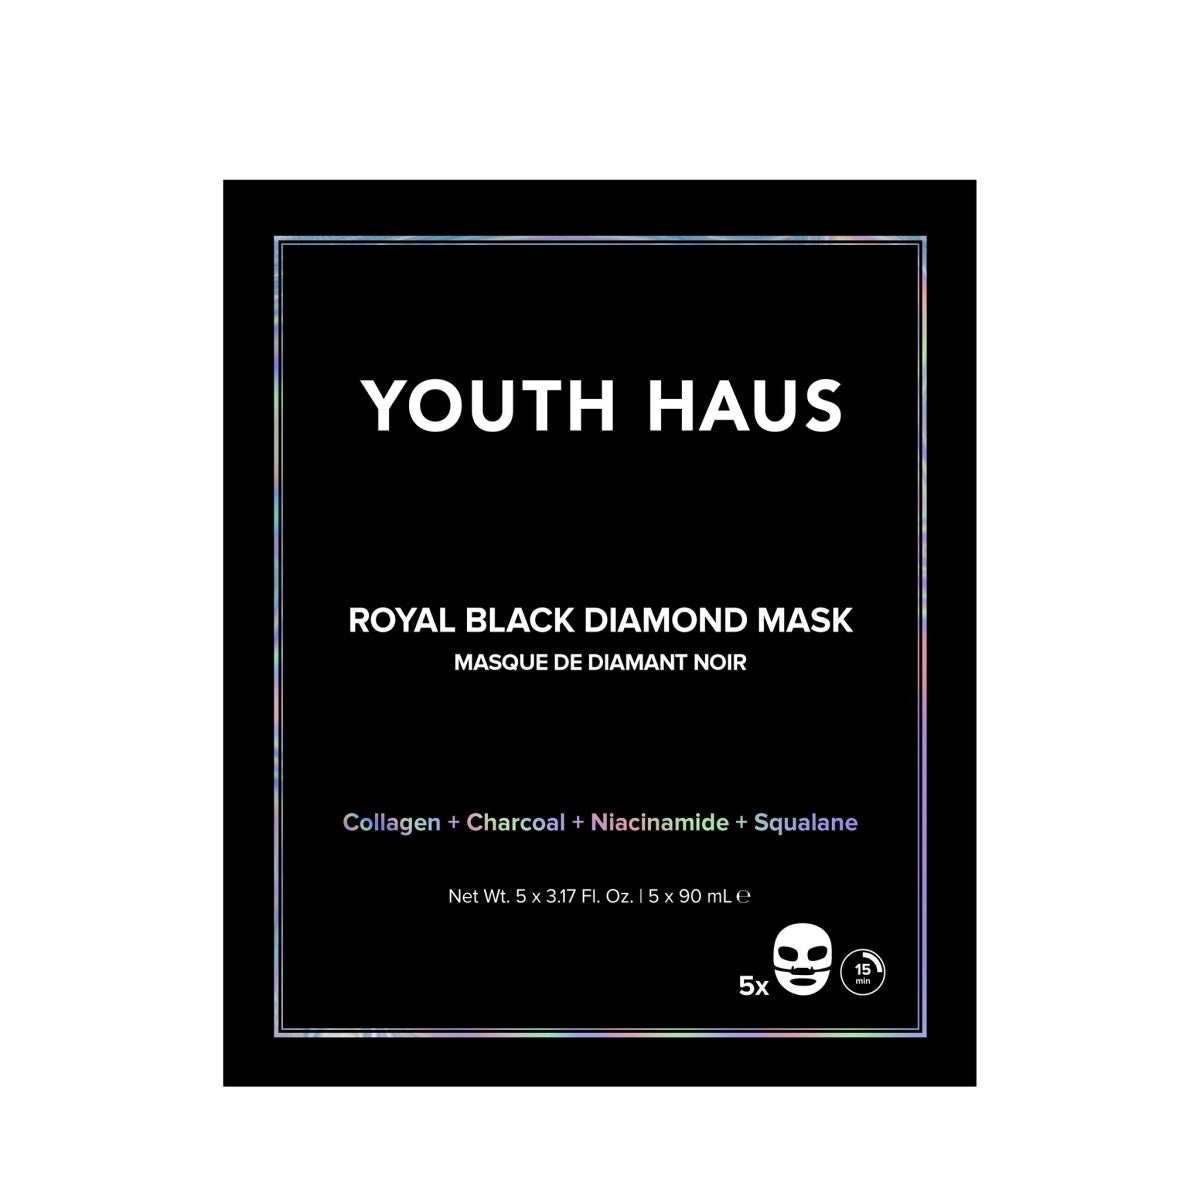 Primary Image of Youth Haus Royal Black Diamond Mask